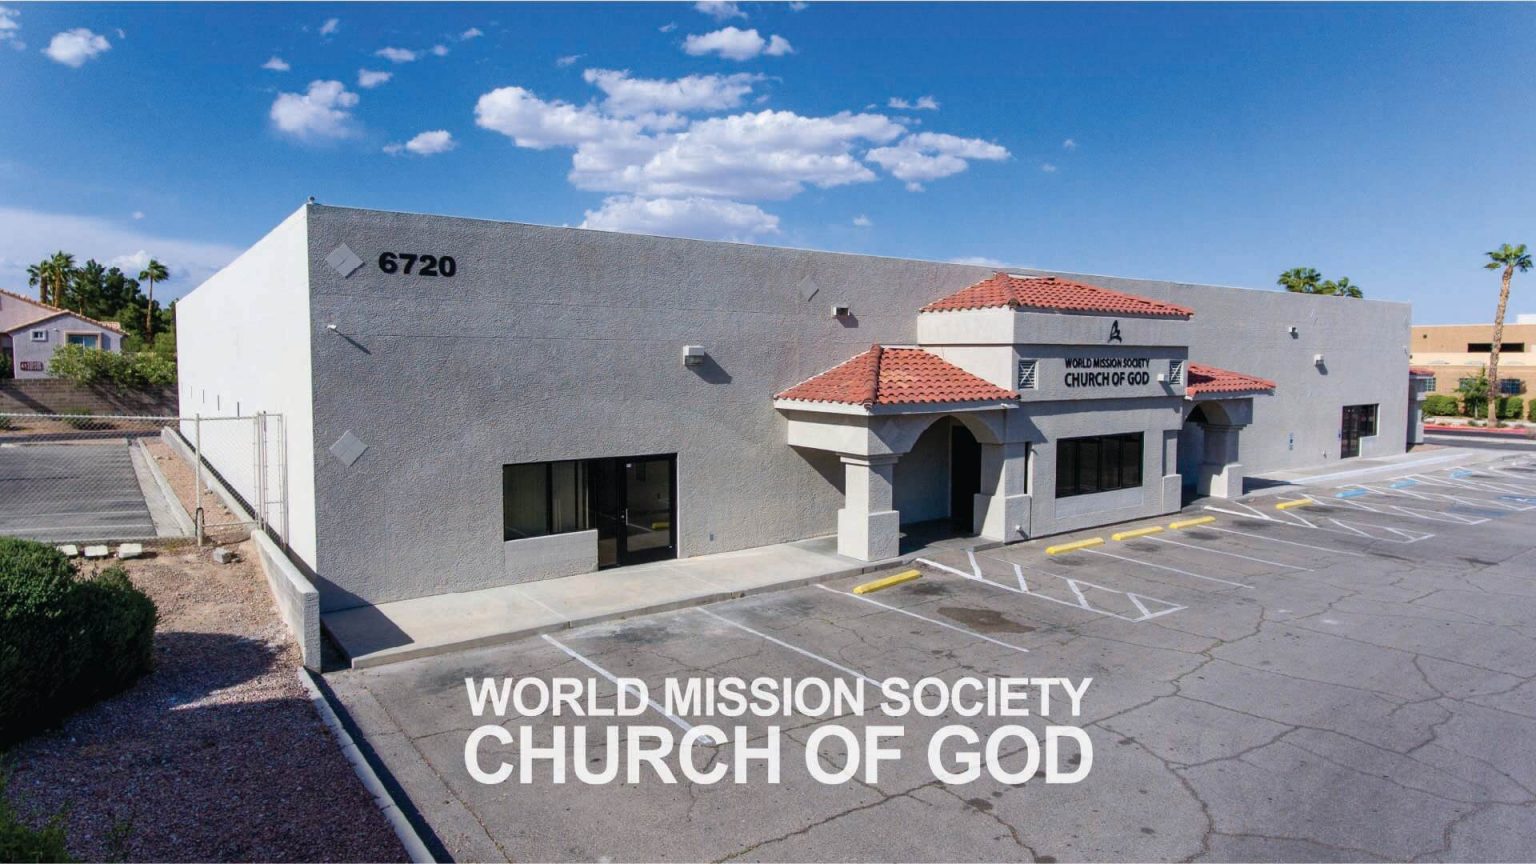 City Mission of Las Vegas